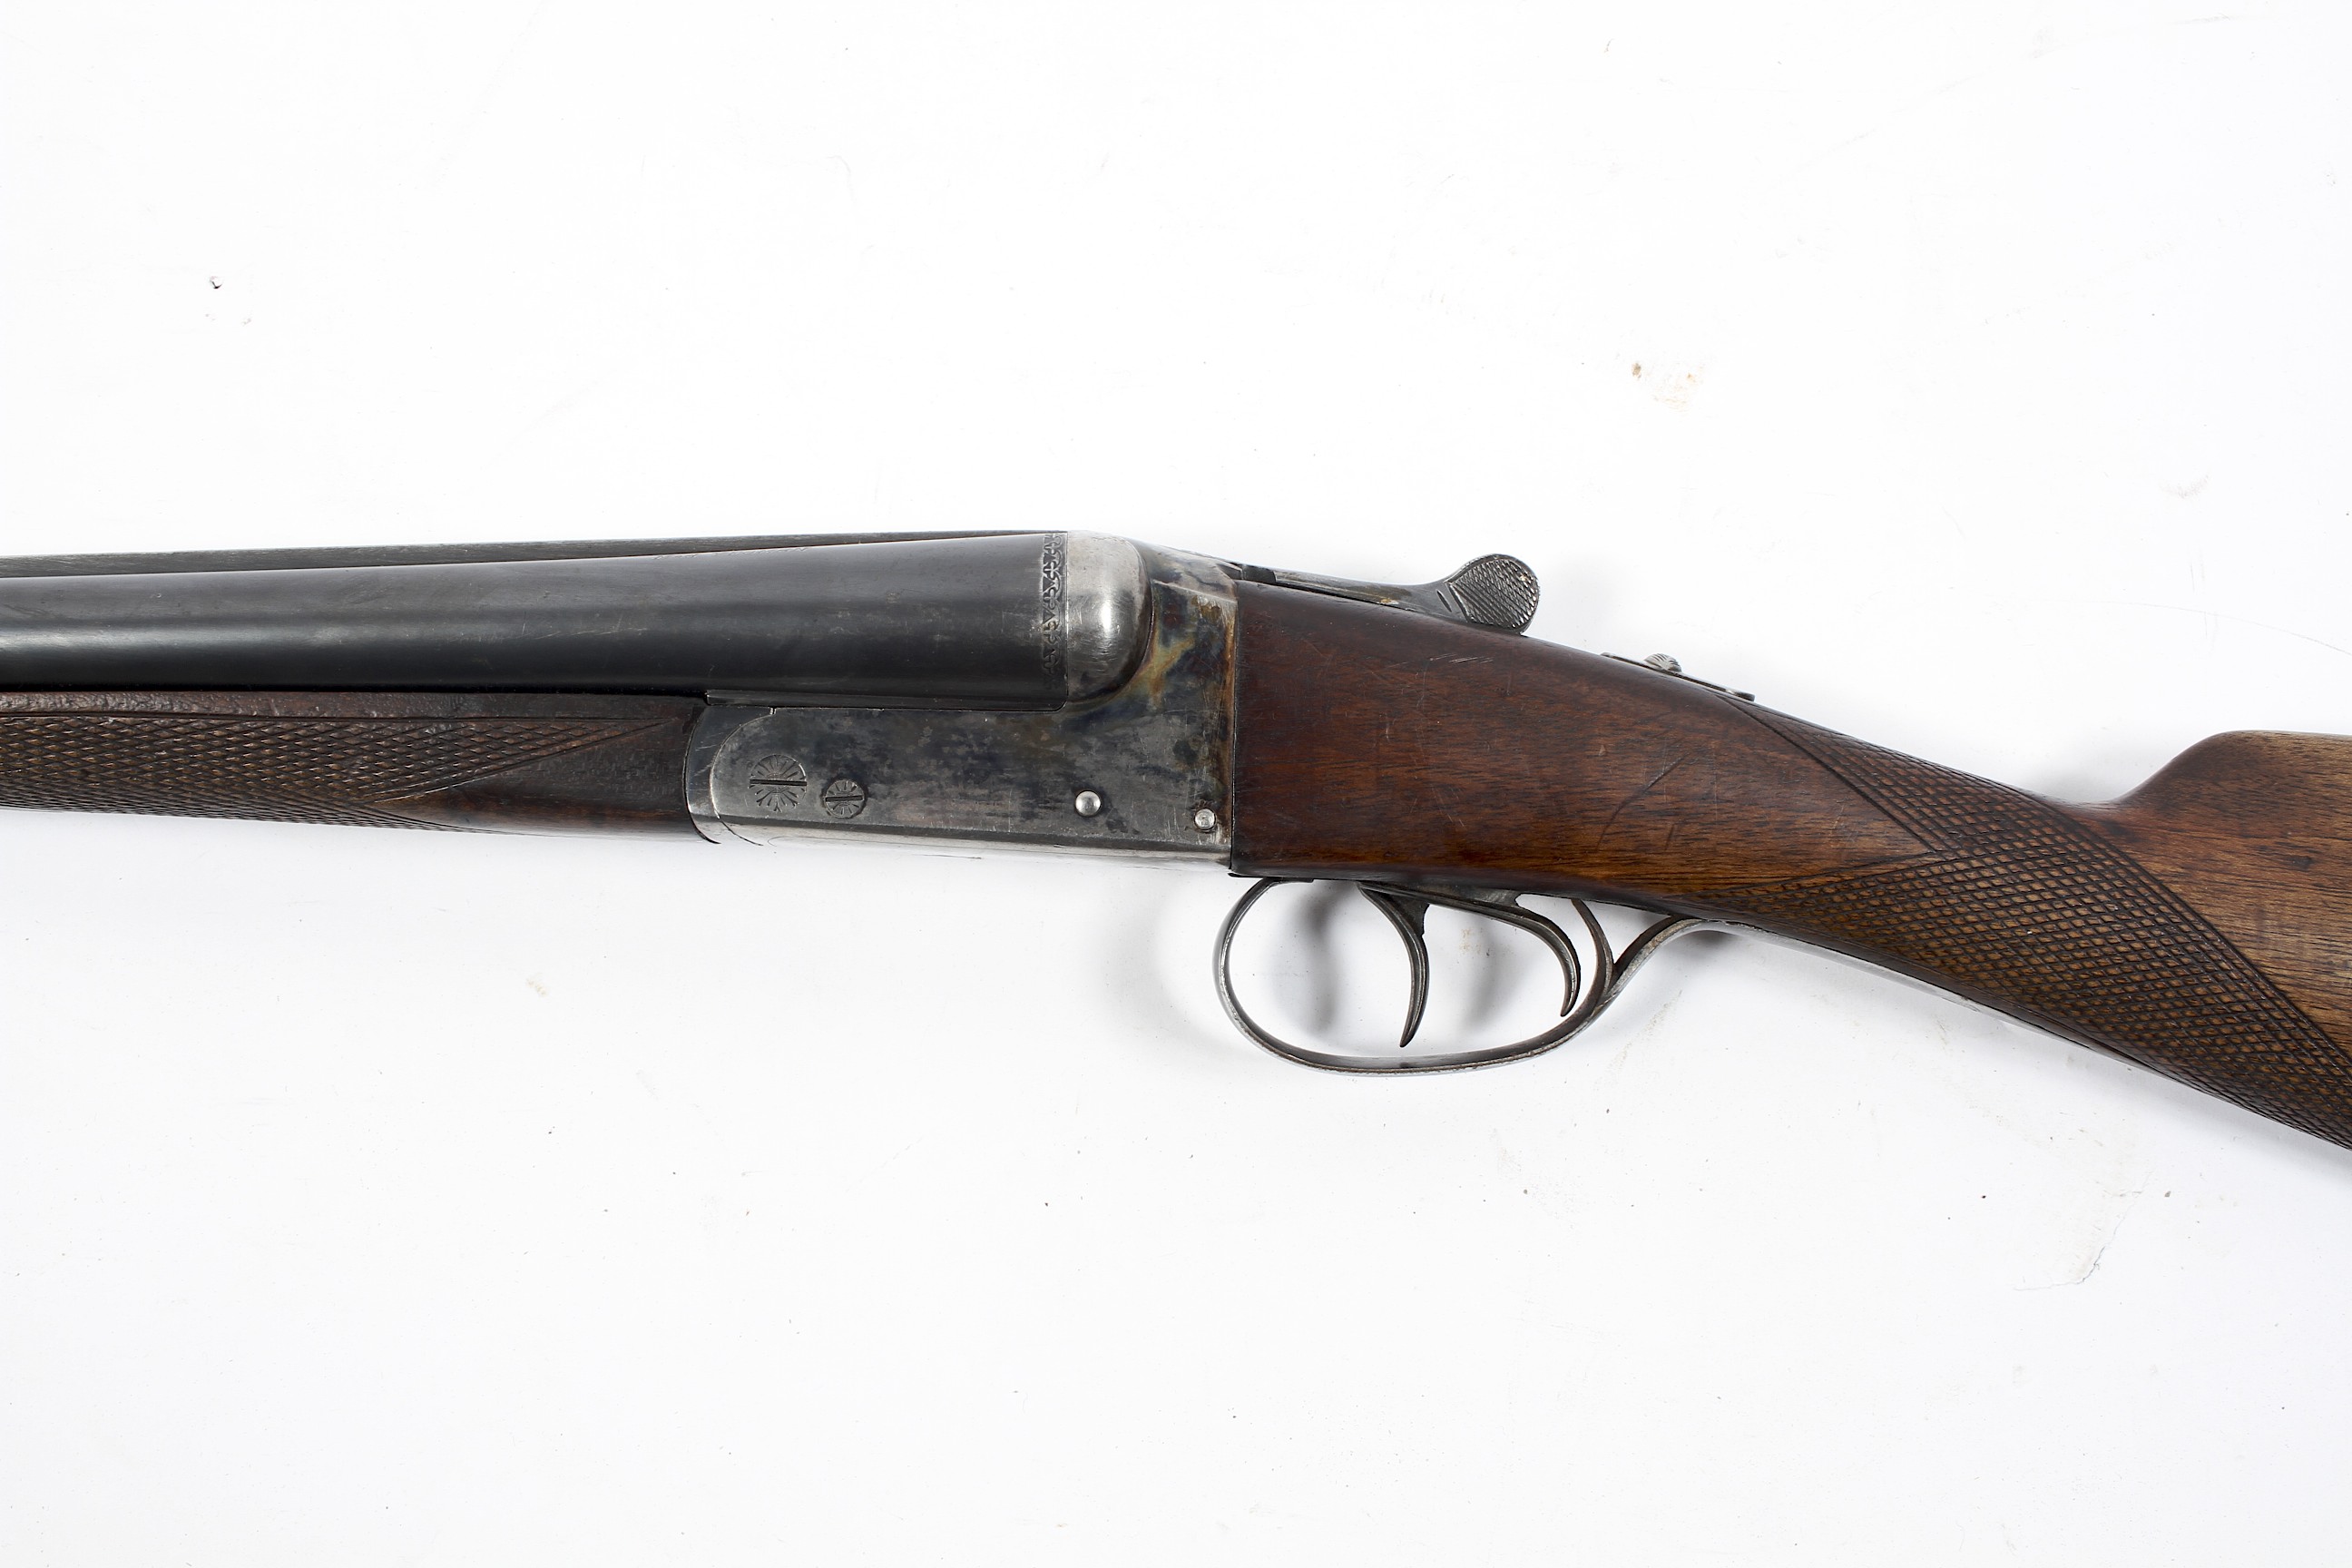 An Aya Yeoman side by side 12g shotgun, - Image 3 of 6